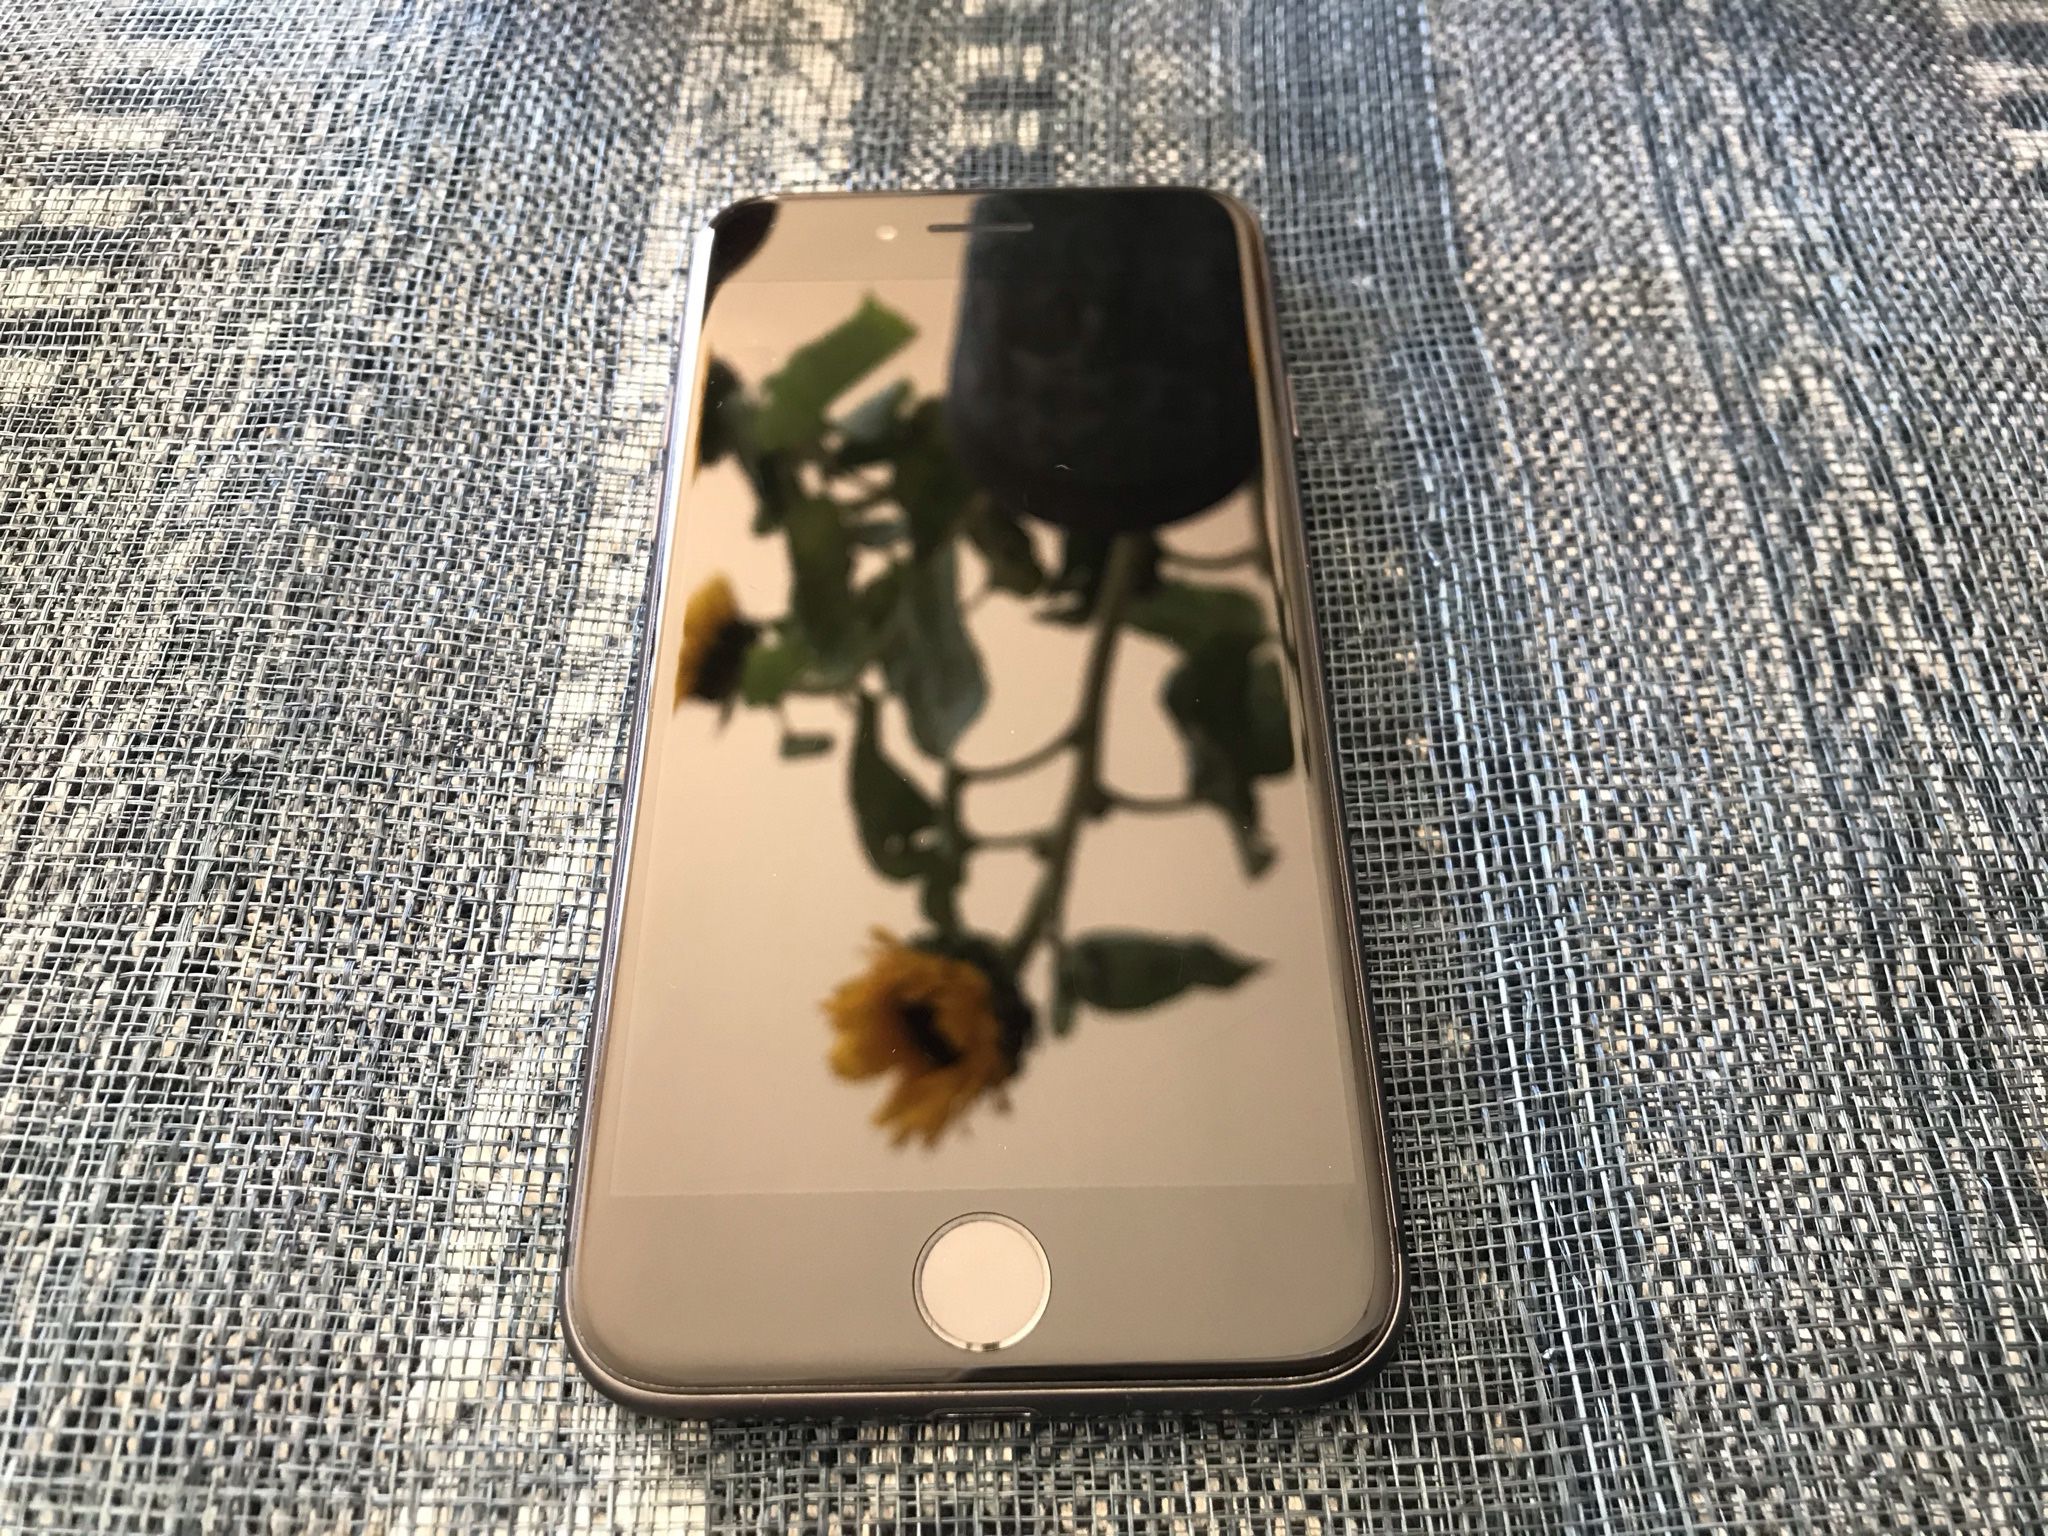 Pristine iPhone 8 64GB space grey unlocked